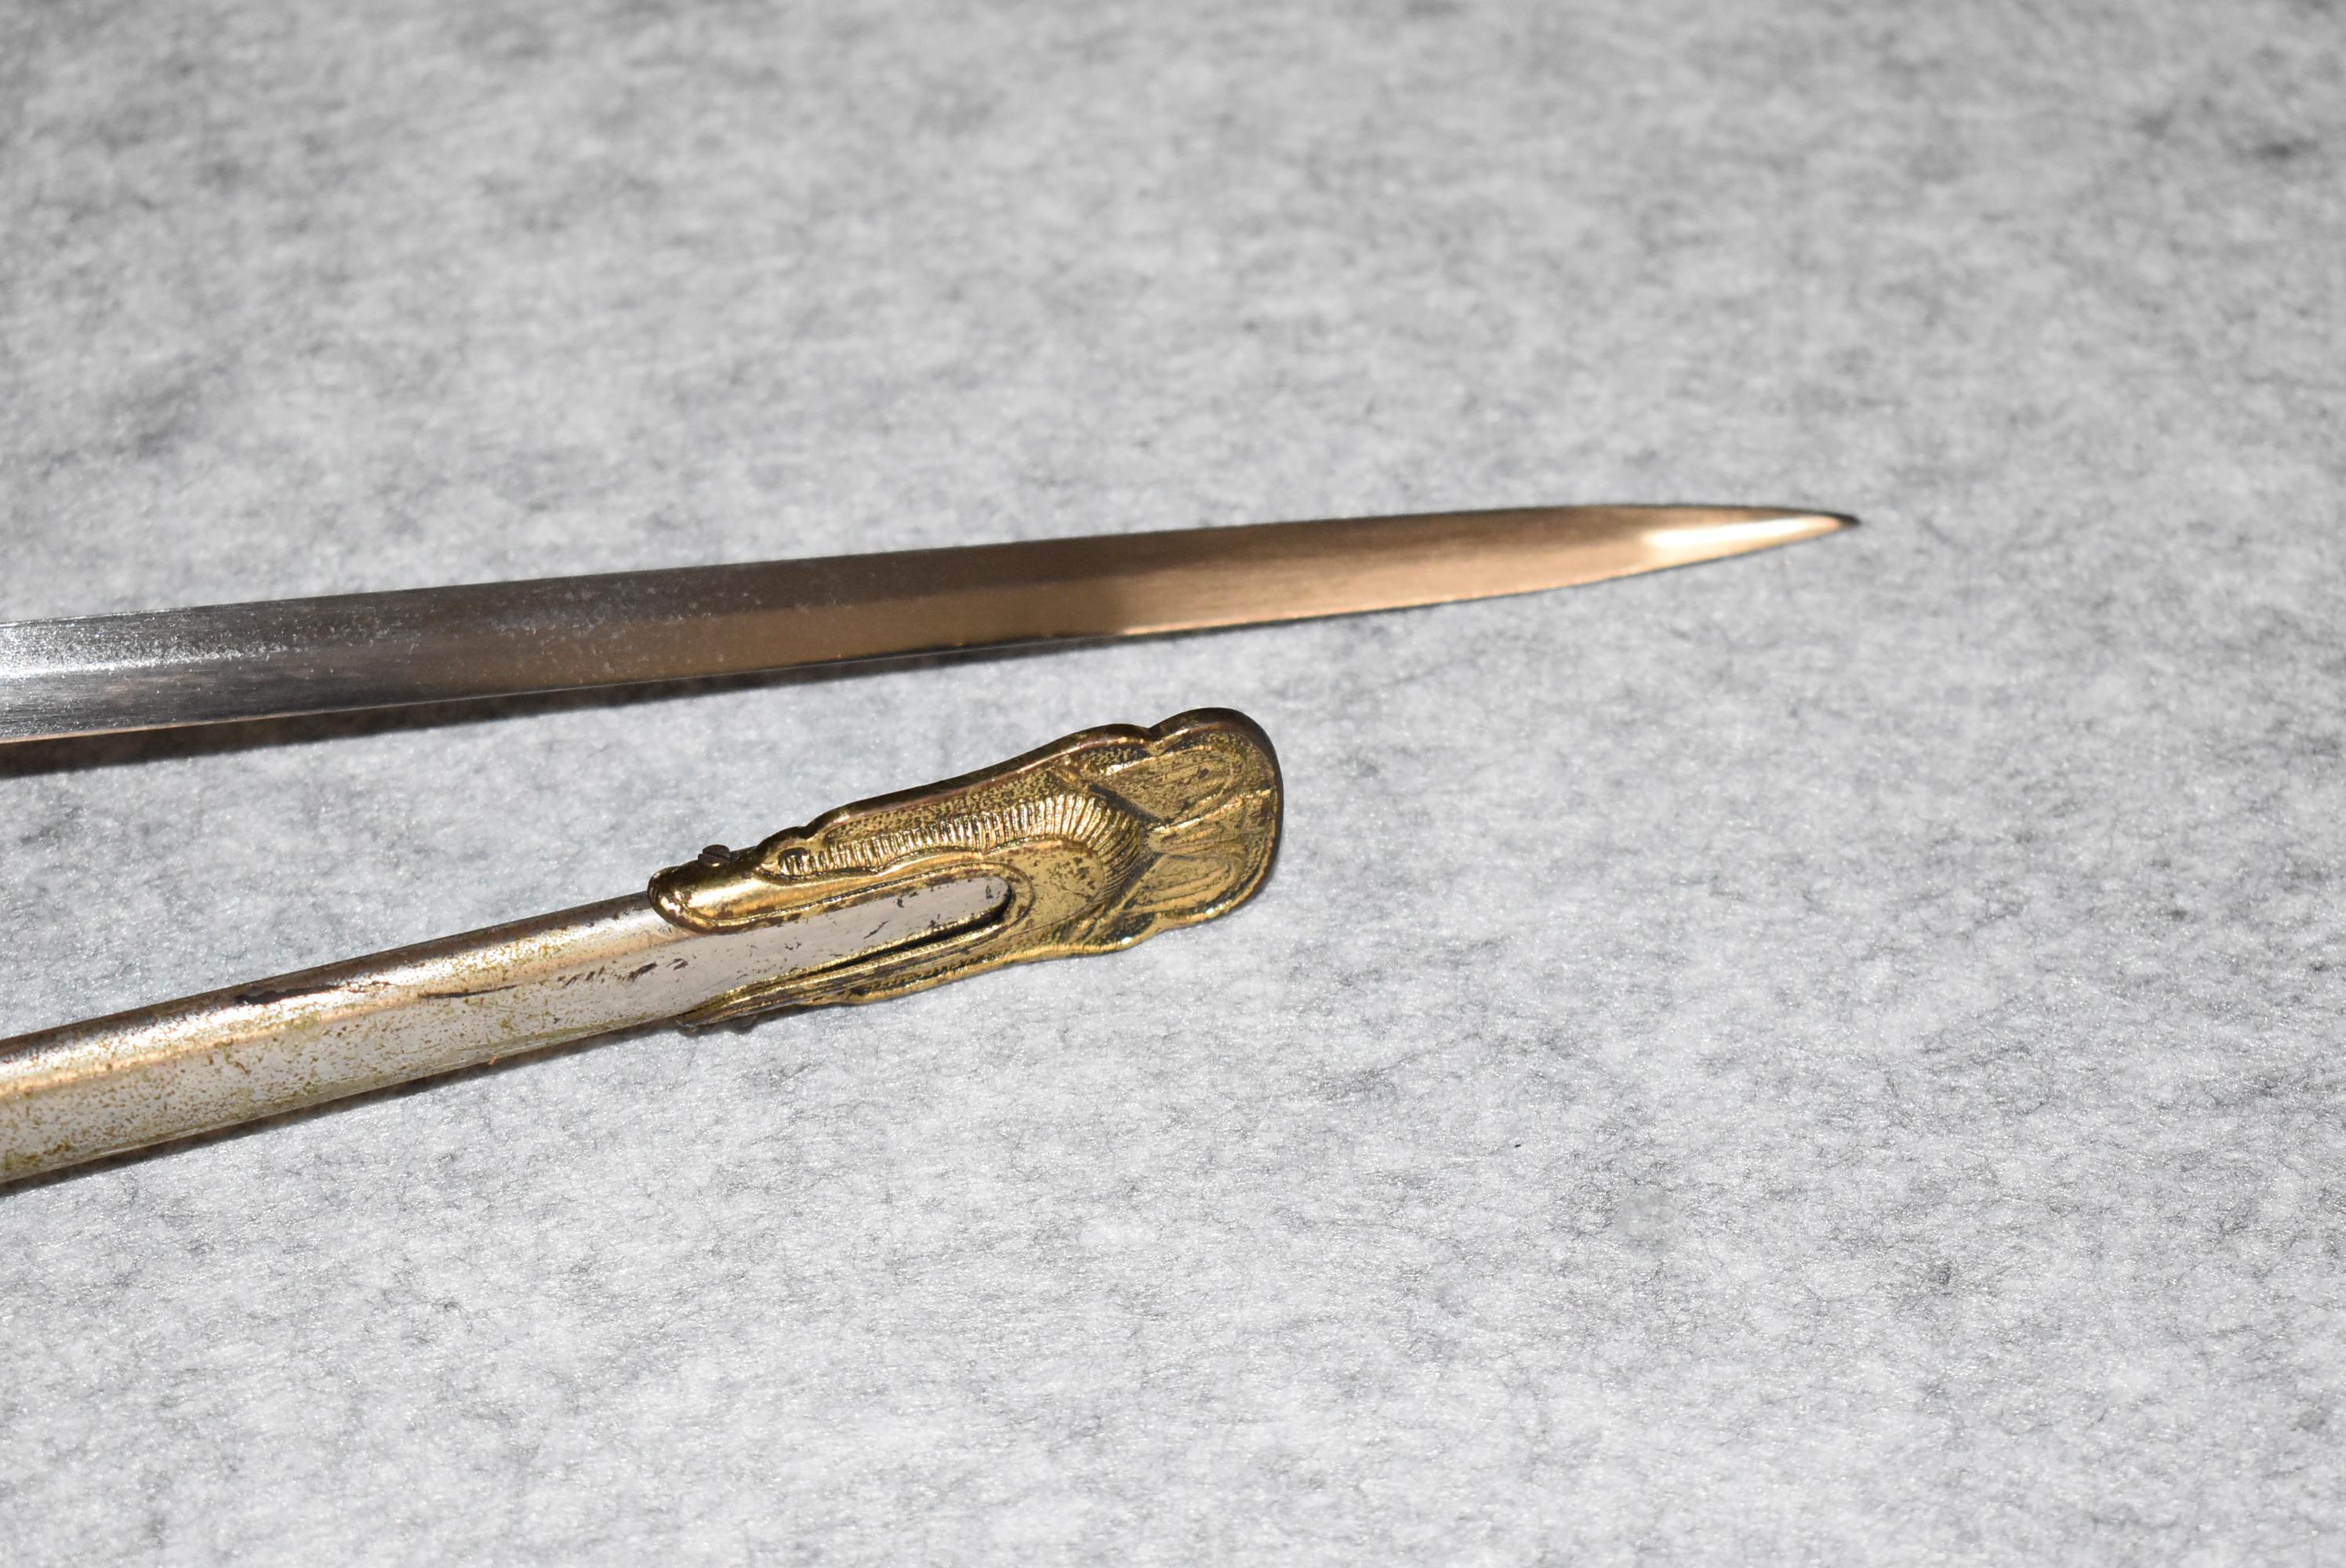 Post War Mfg. U.S. Model 1860 Pattern Field & Staff Officer’s Sword – w/Plain Blade – w/Scabbard